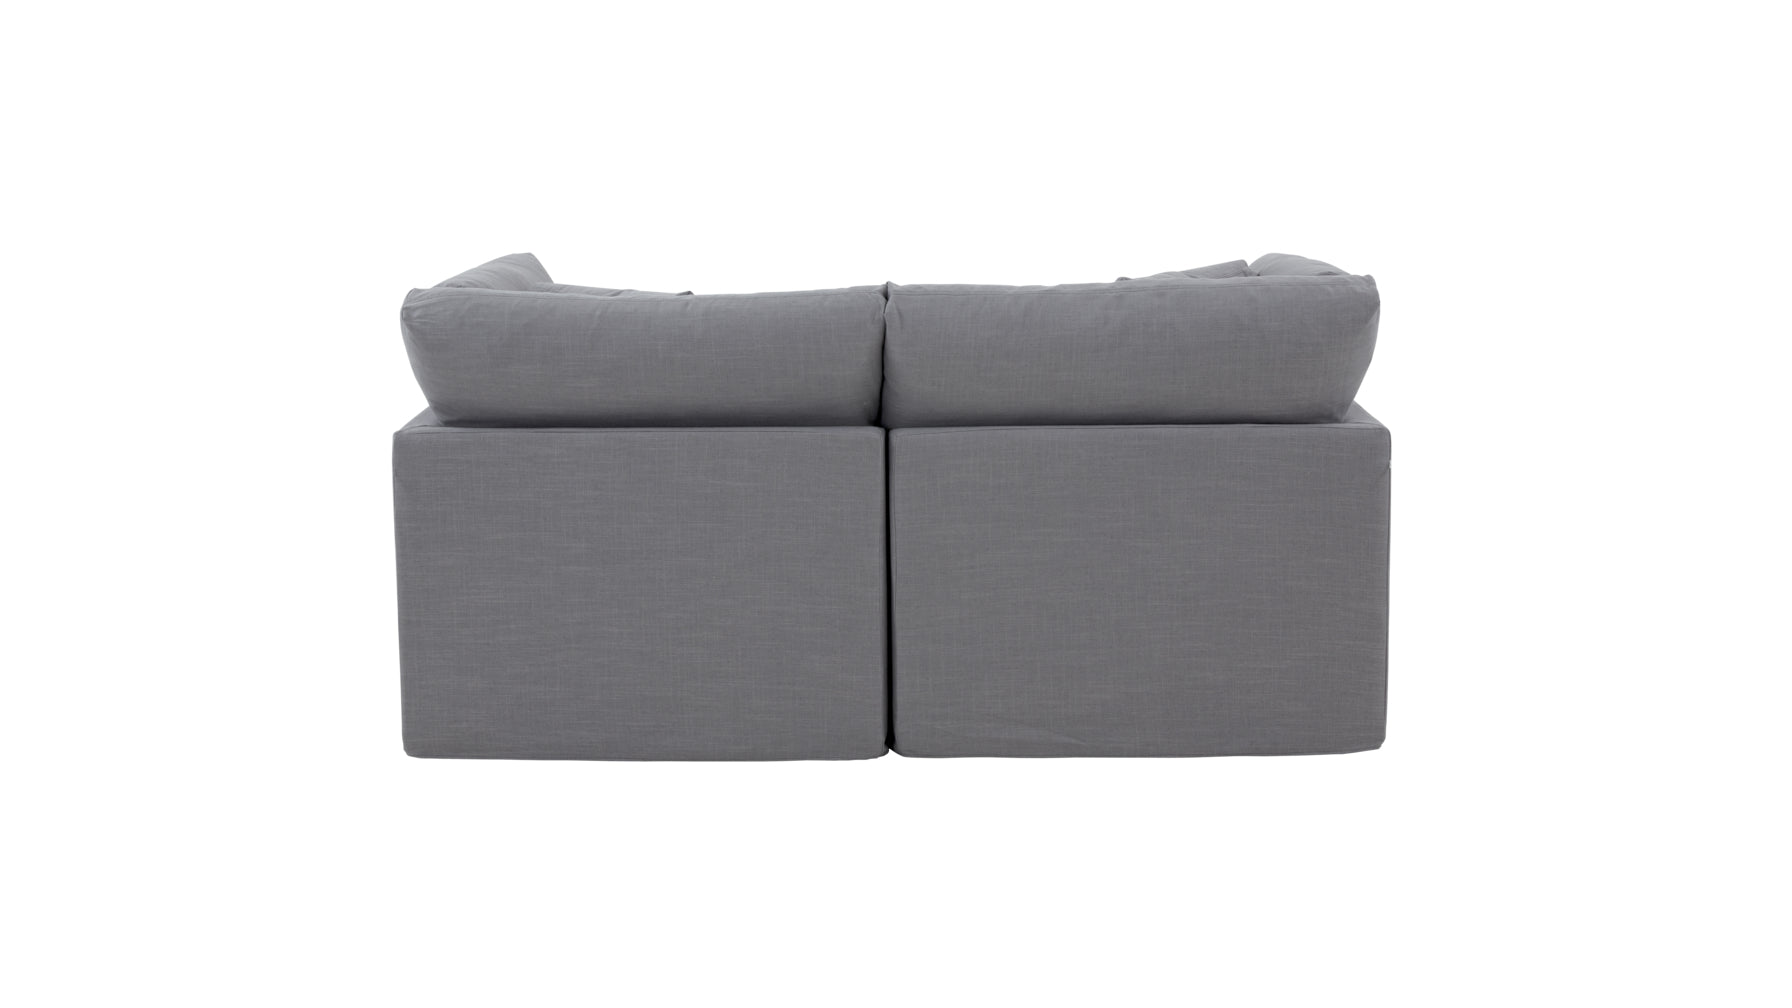 Get Together™ 2-Piece Modular Sofa, Standard, Moonlight - Image 6